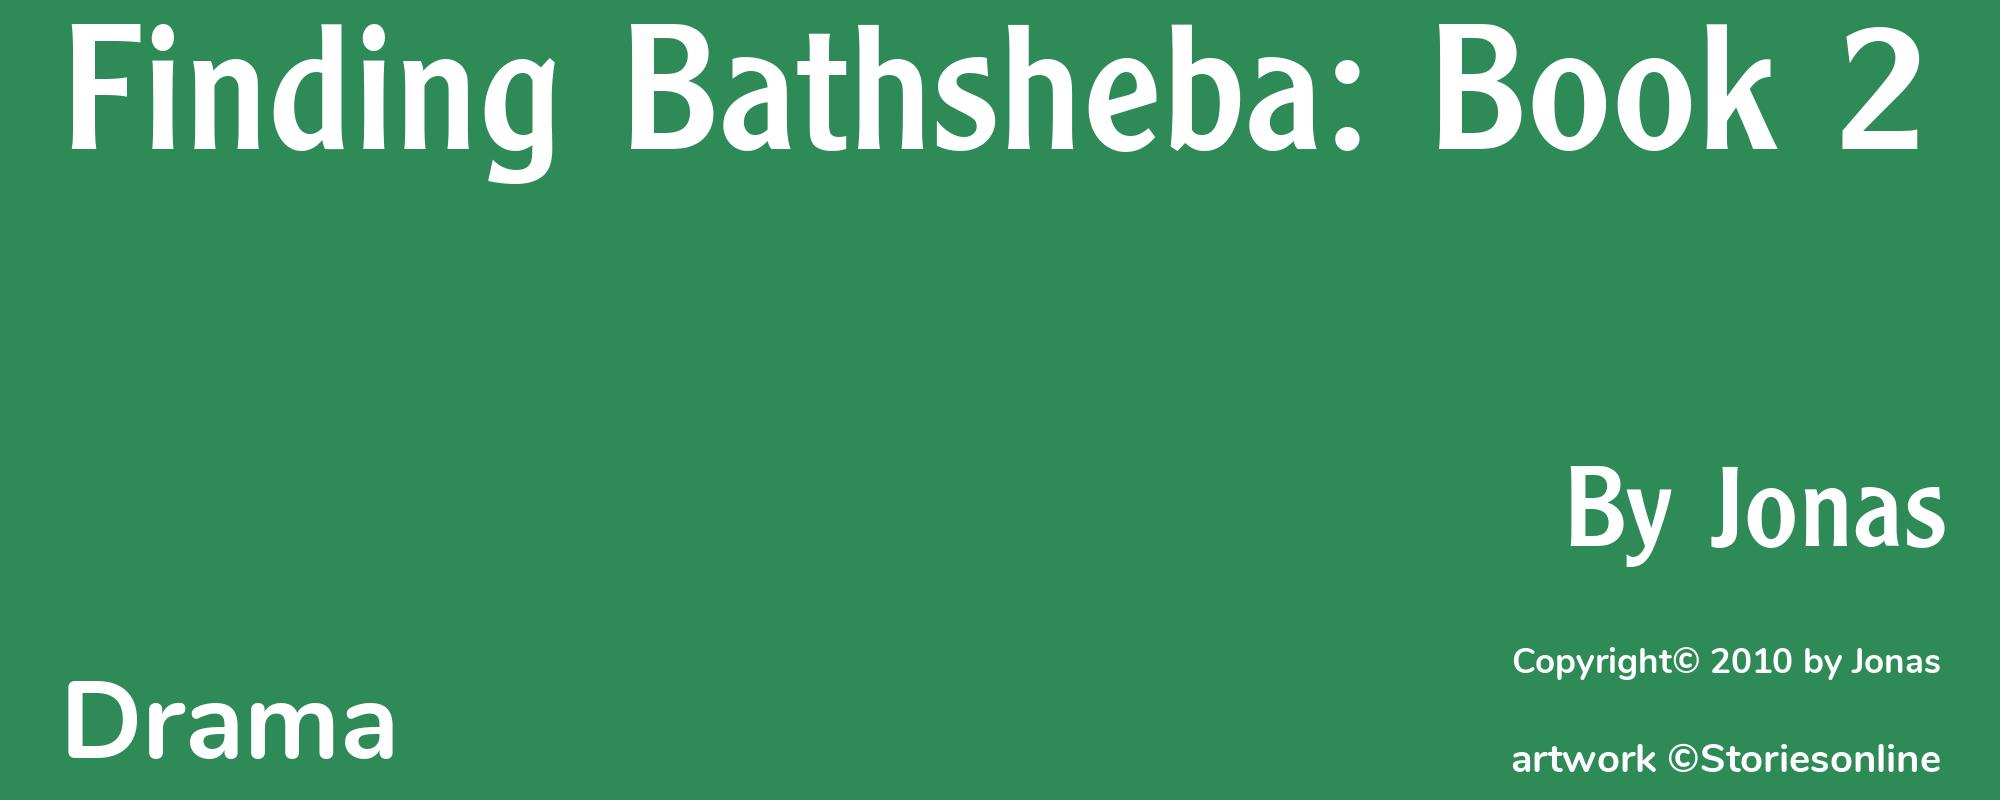 Finding Bathsheba: Book 2 - Cover